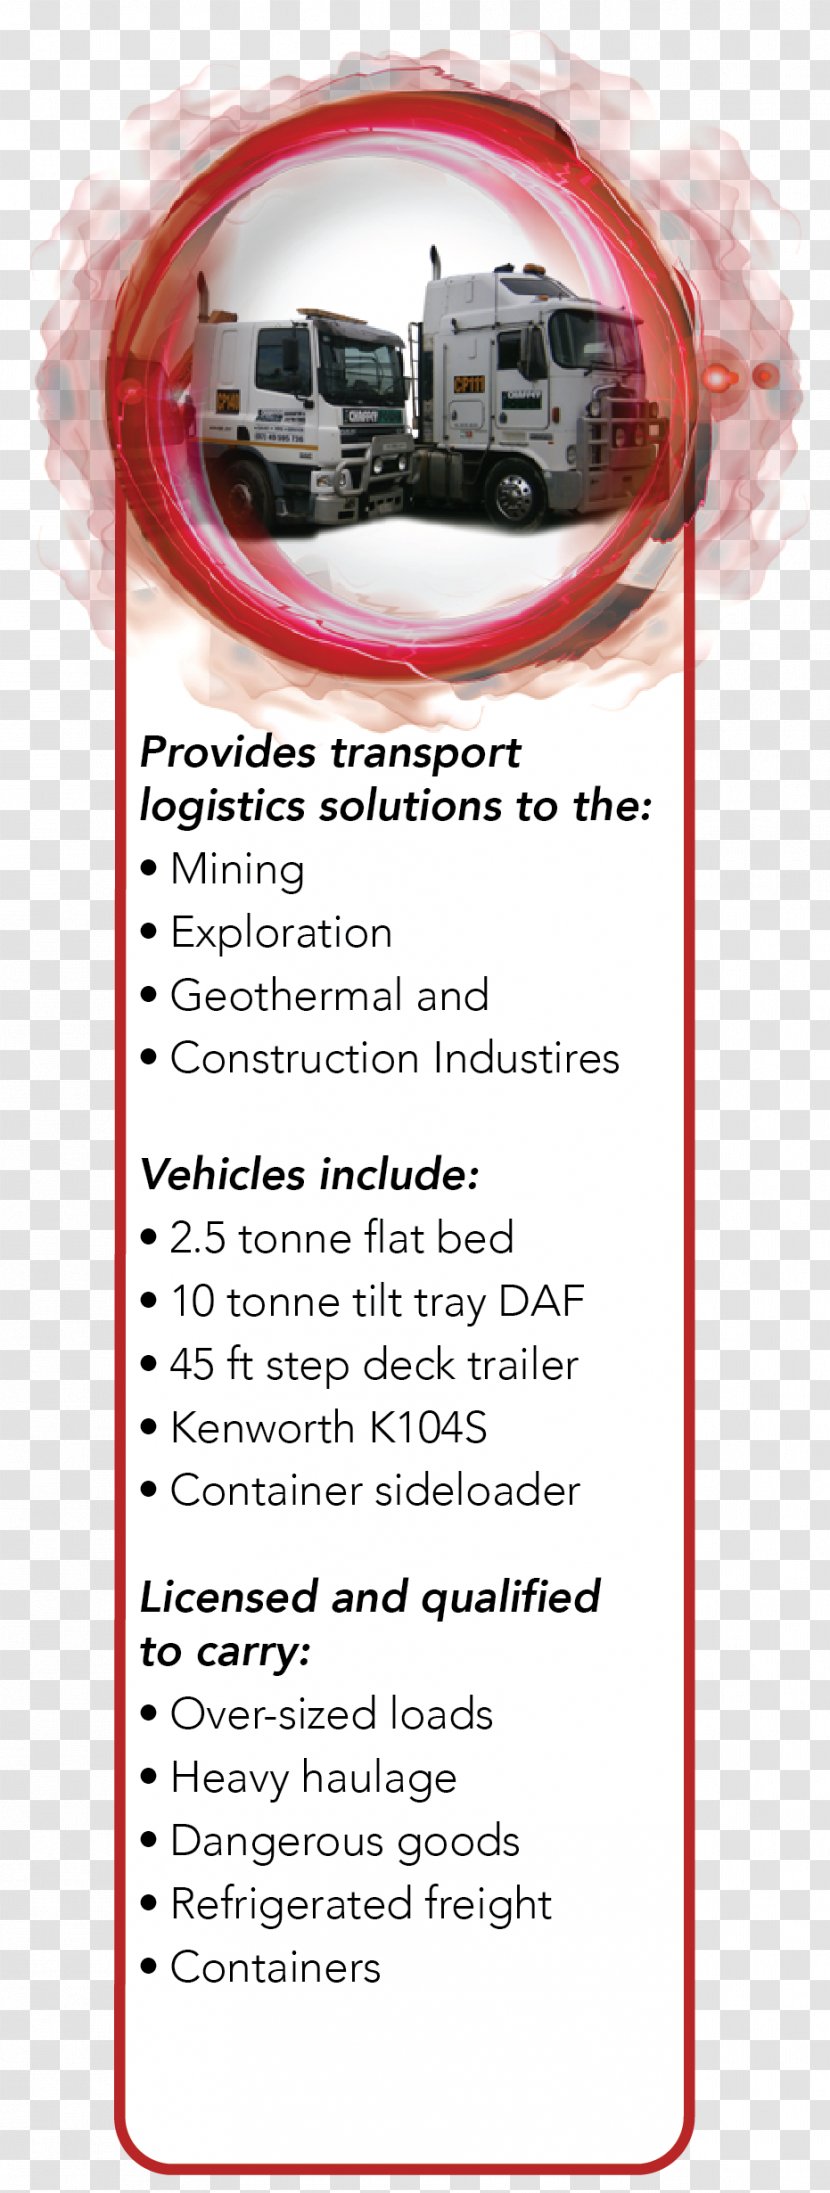 Transport Logistics Supply Font - Dangerous Goods Transparent PNG